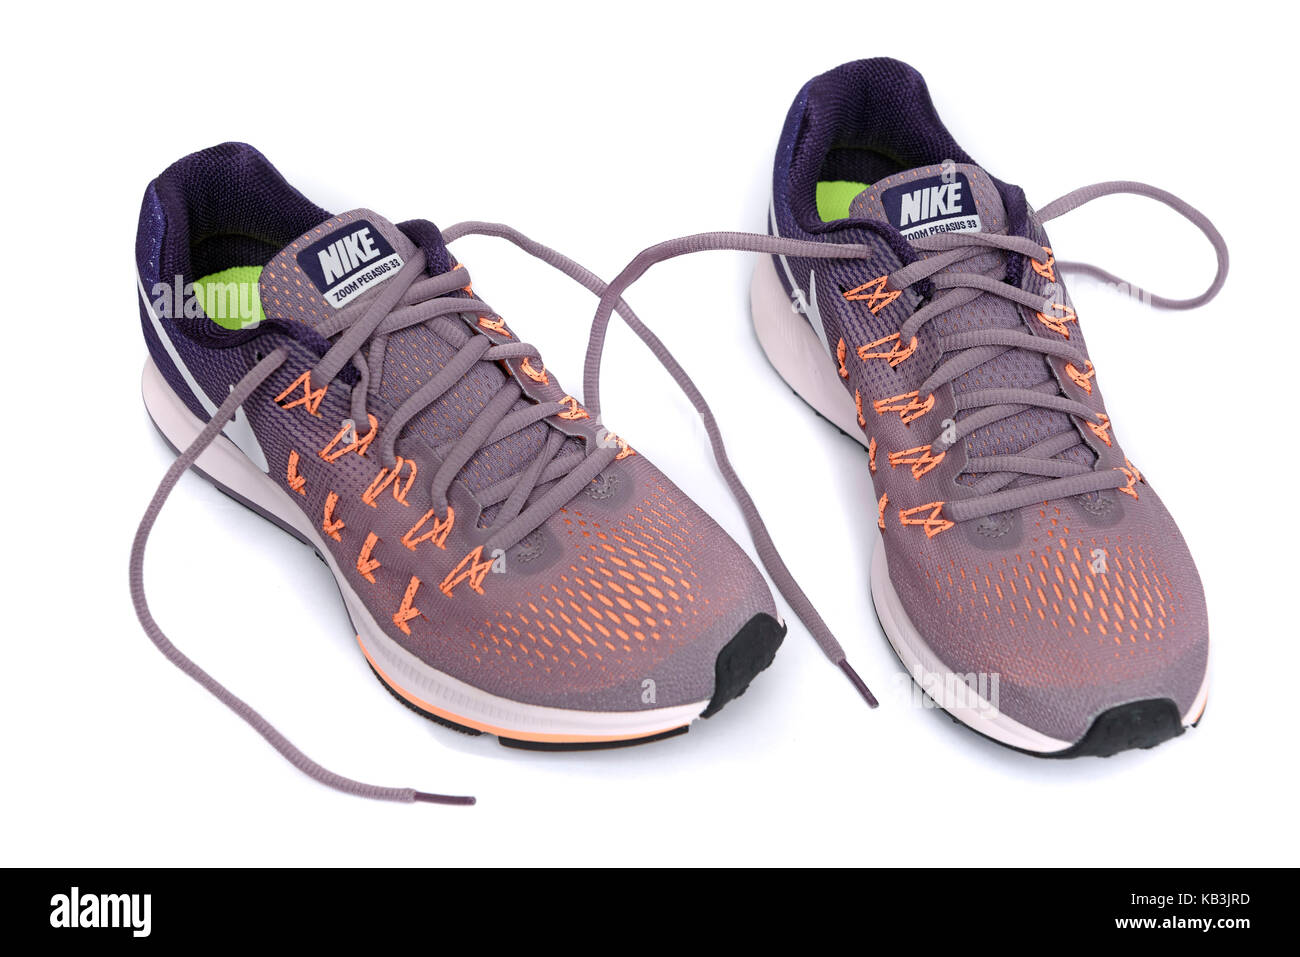 Viola e arancione Nike Pegasus 33 scarpe running cut-out isolati su sfondo bianco Foto Stock